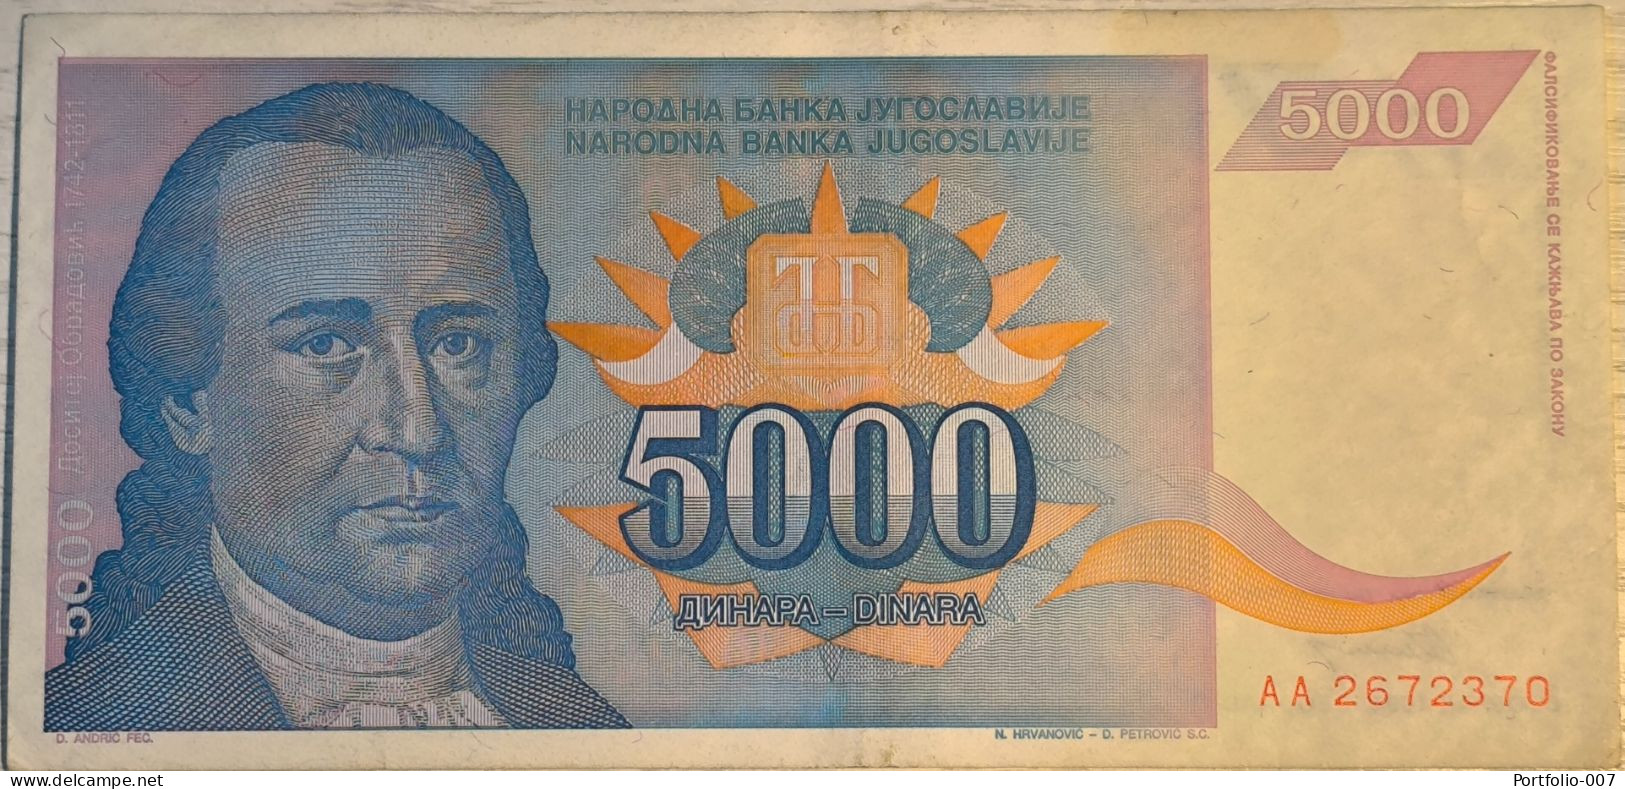 5000 Dinara, 1994. Yugoslavia - Yougoslavie